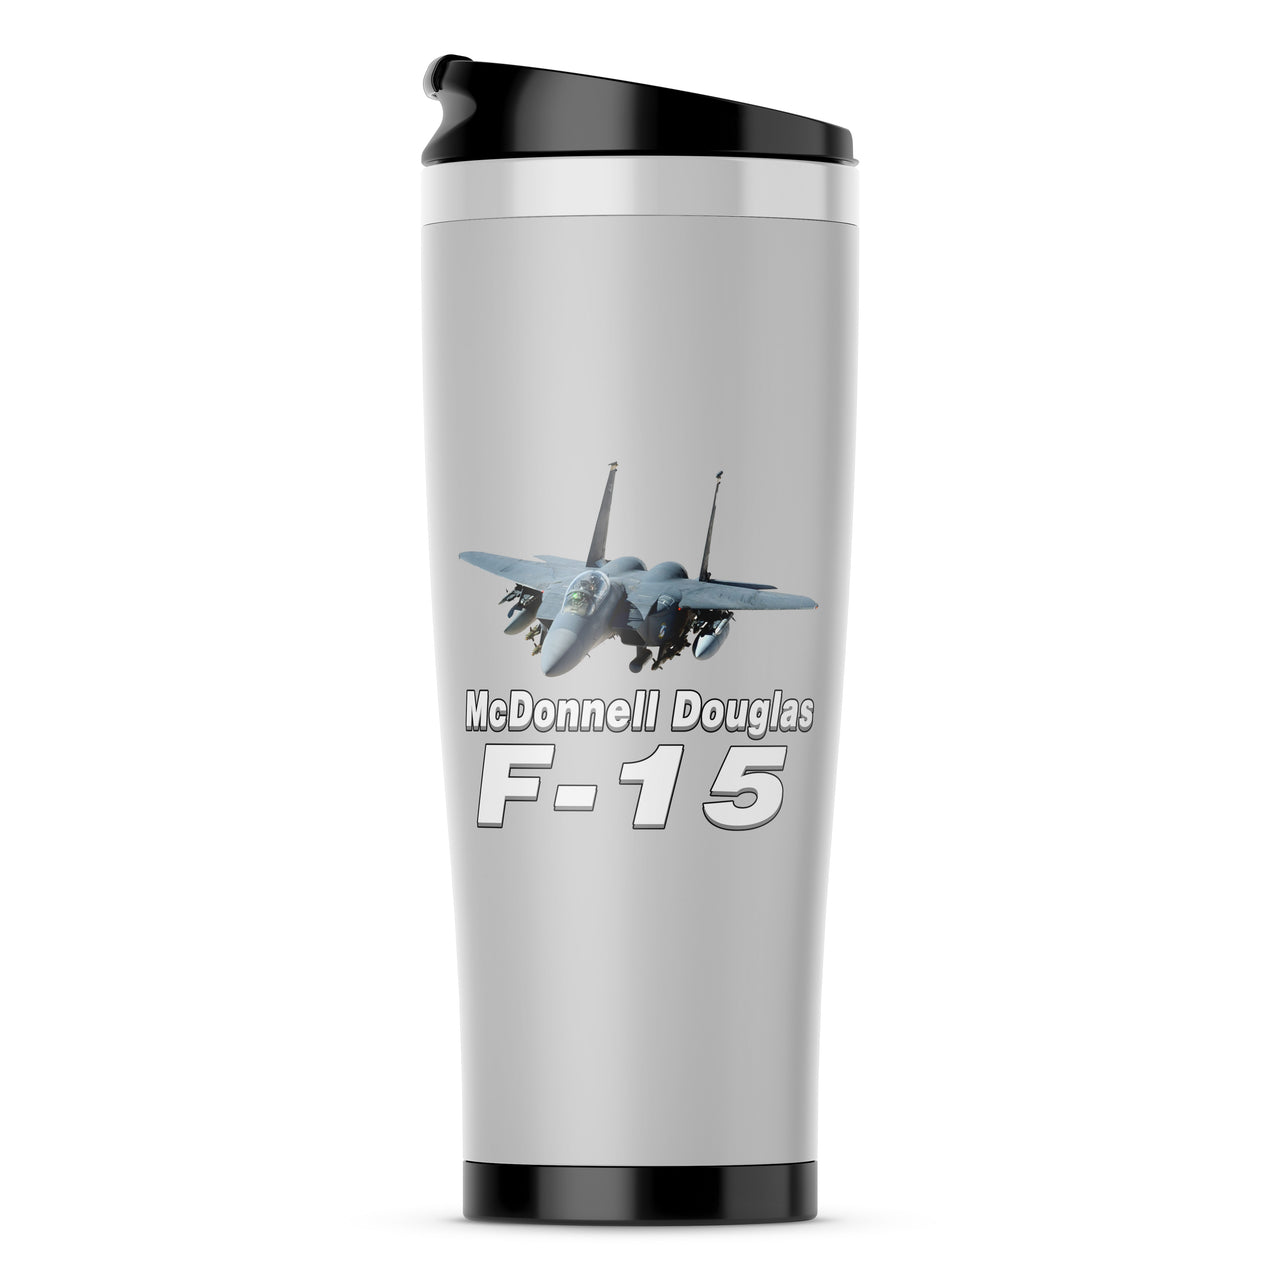 The McDonnell Douglas F15 Designed Travel Mugs